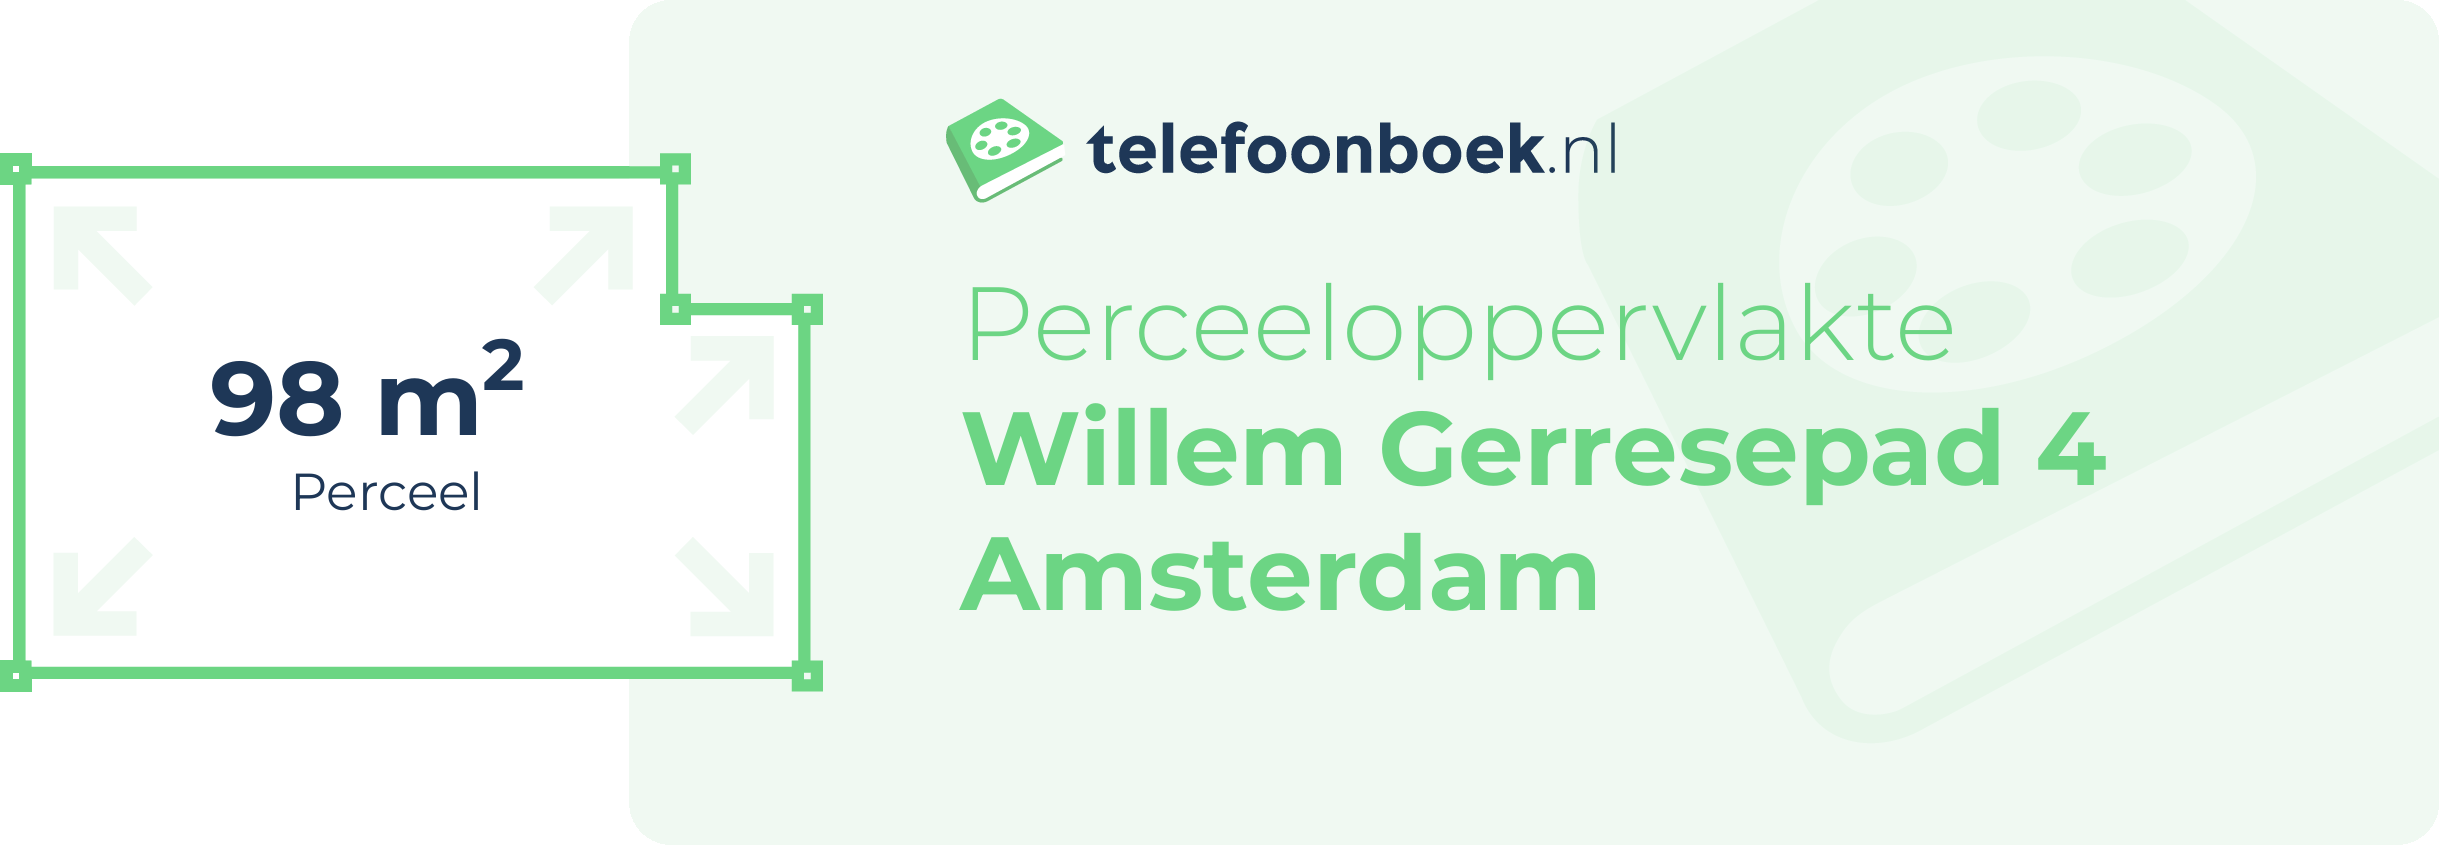 Perceeloppervlakte Willem Gerresepad 4 Amsterdam